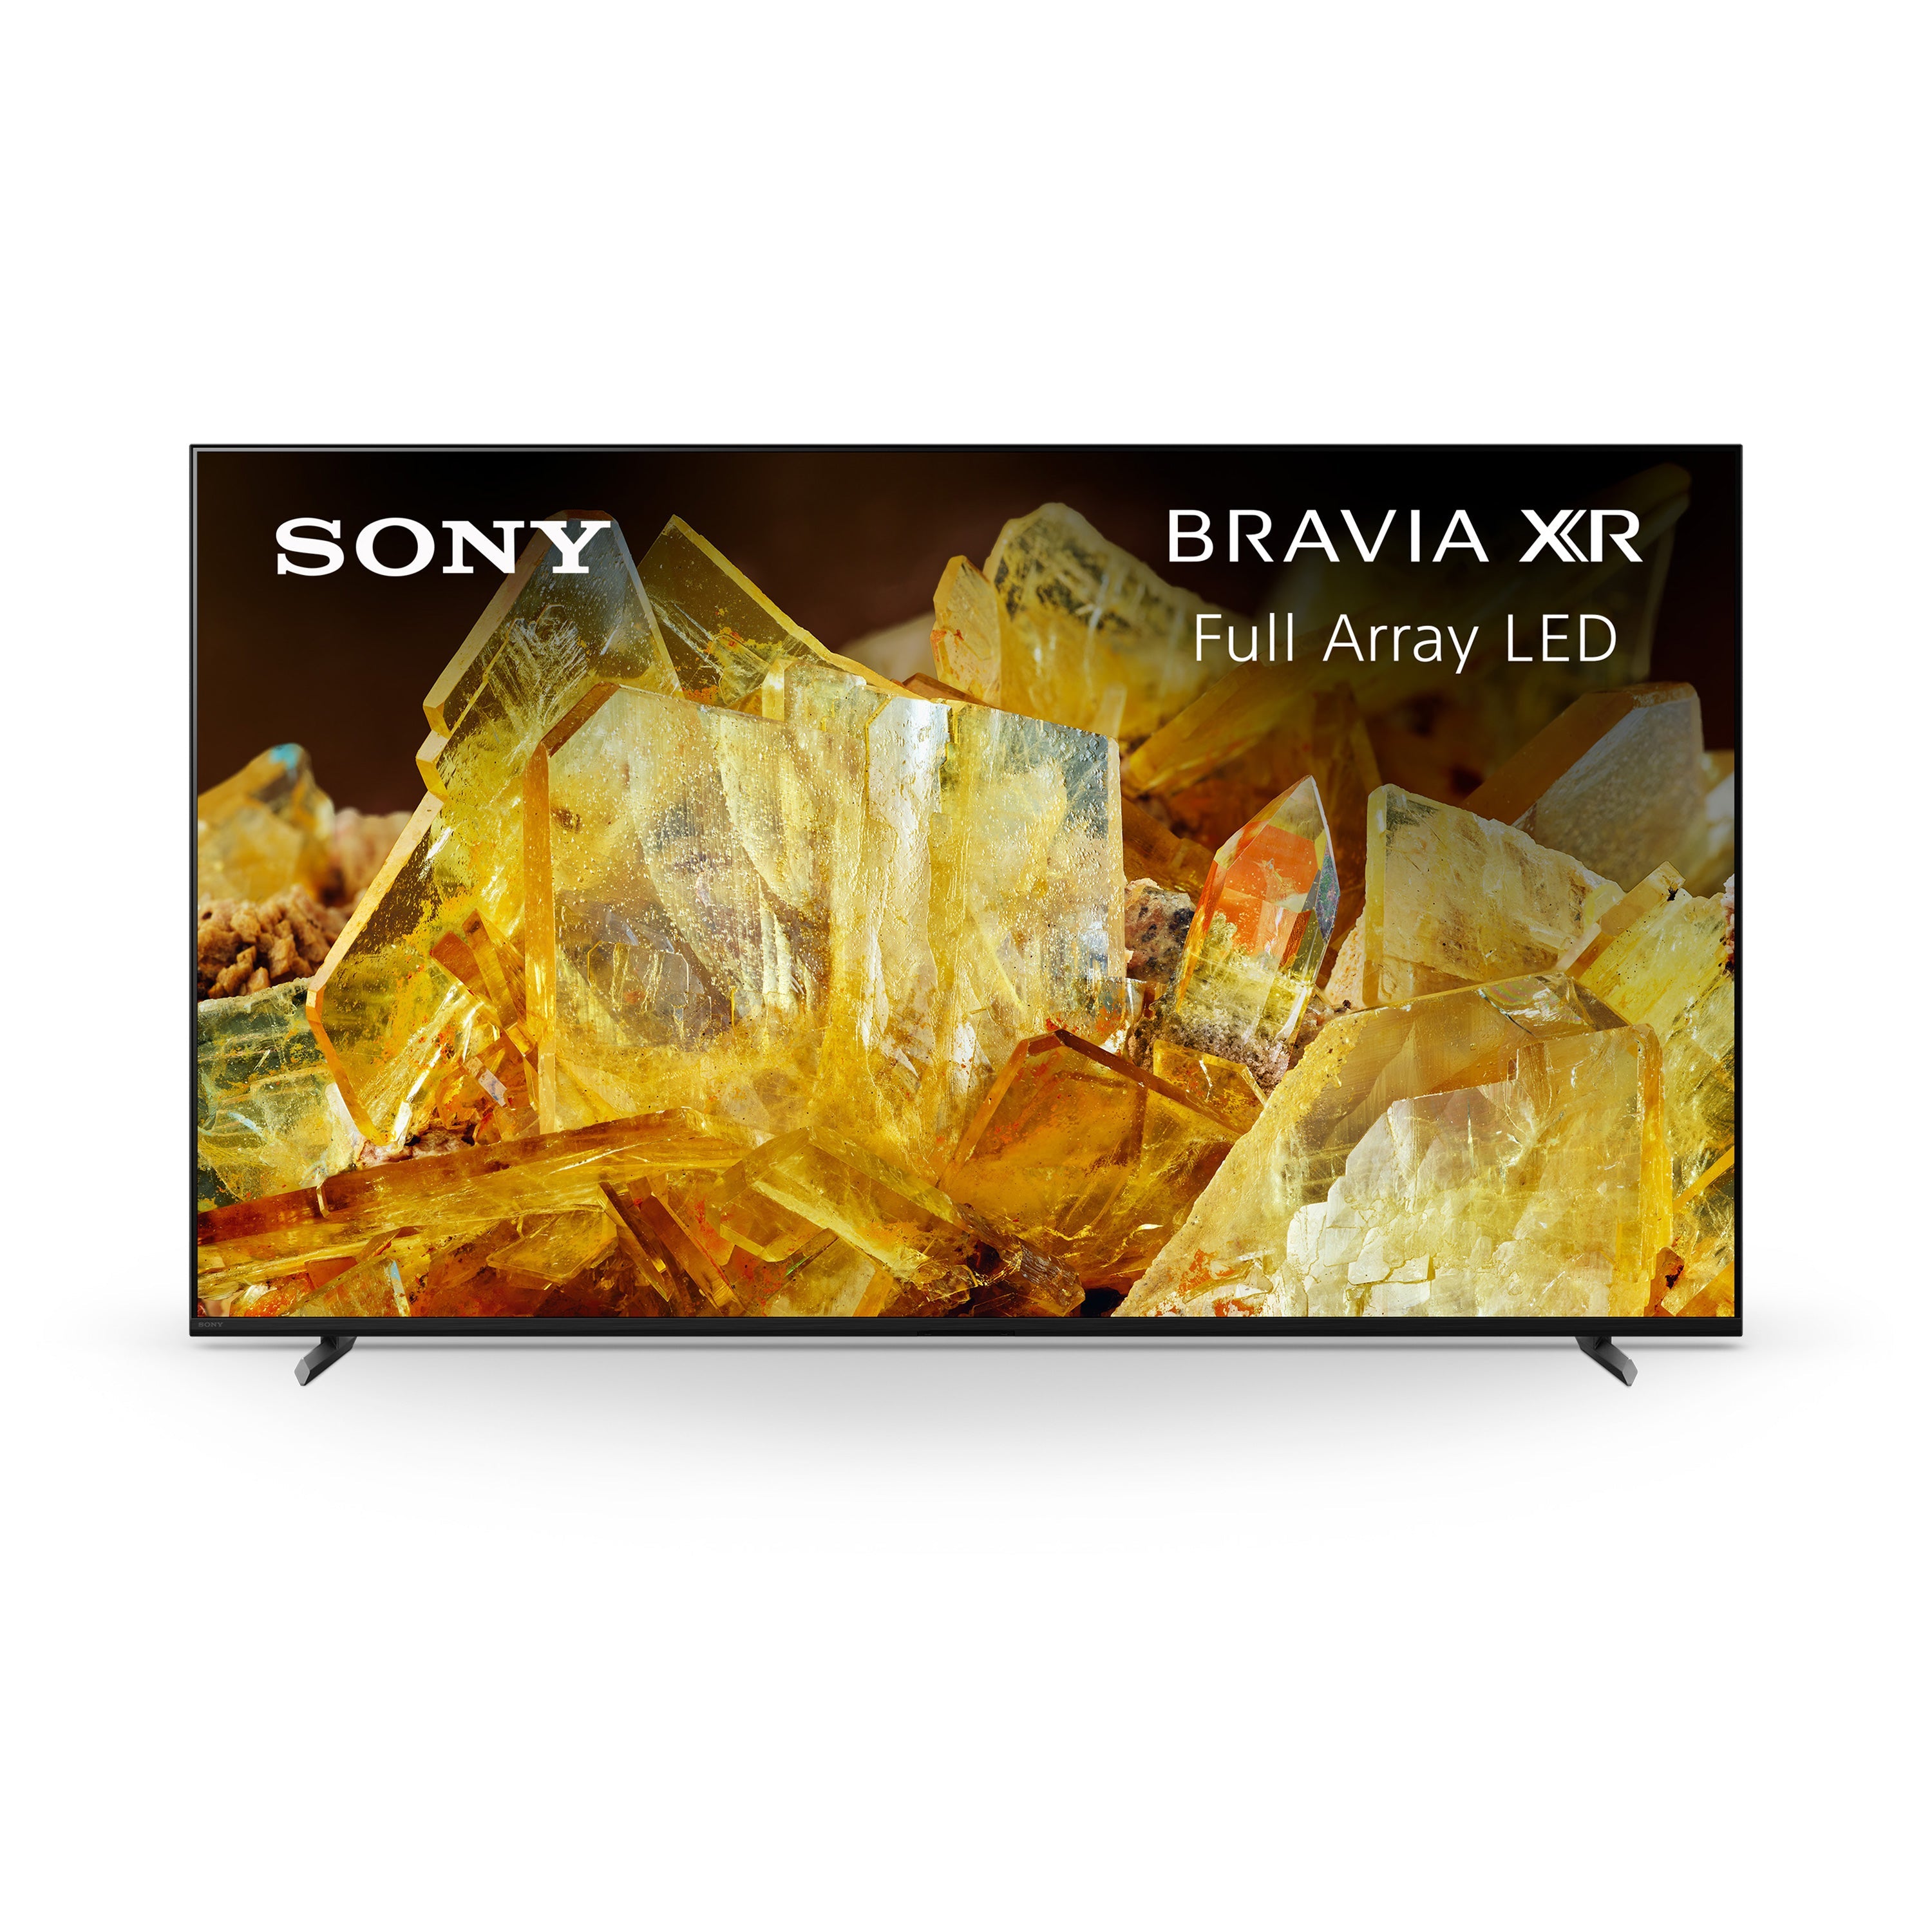 X90L BRAVIA XR | Full Array LED | 4K HDR TV with Playstation 5 Bundle